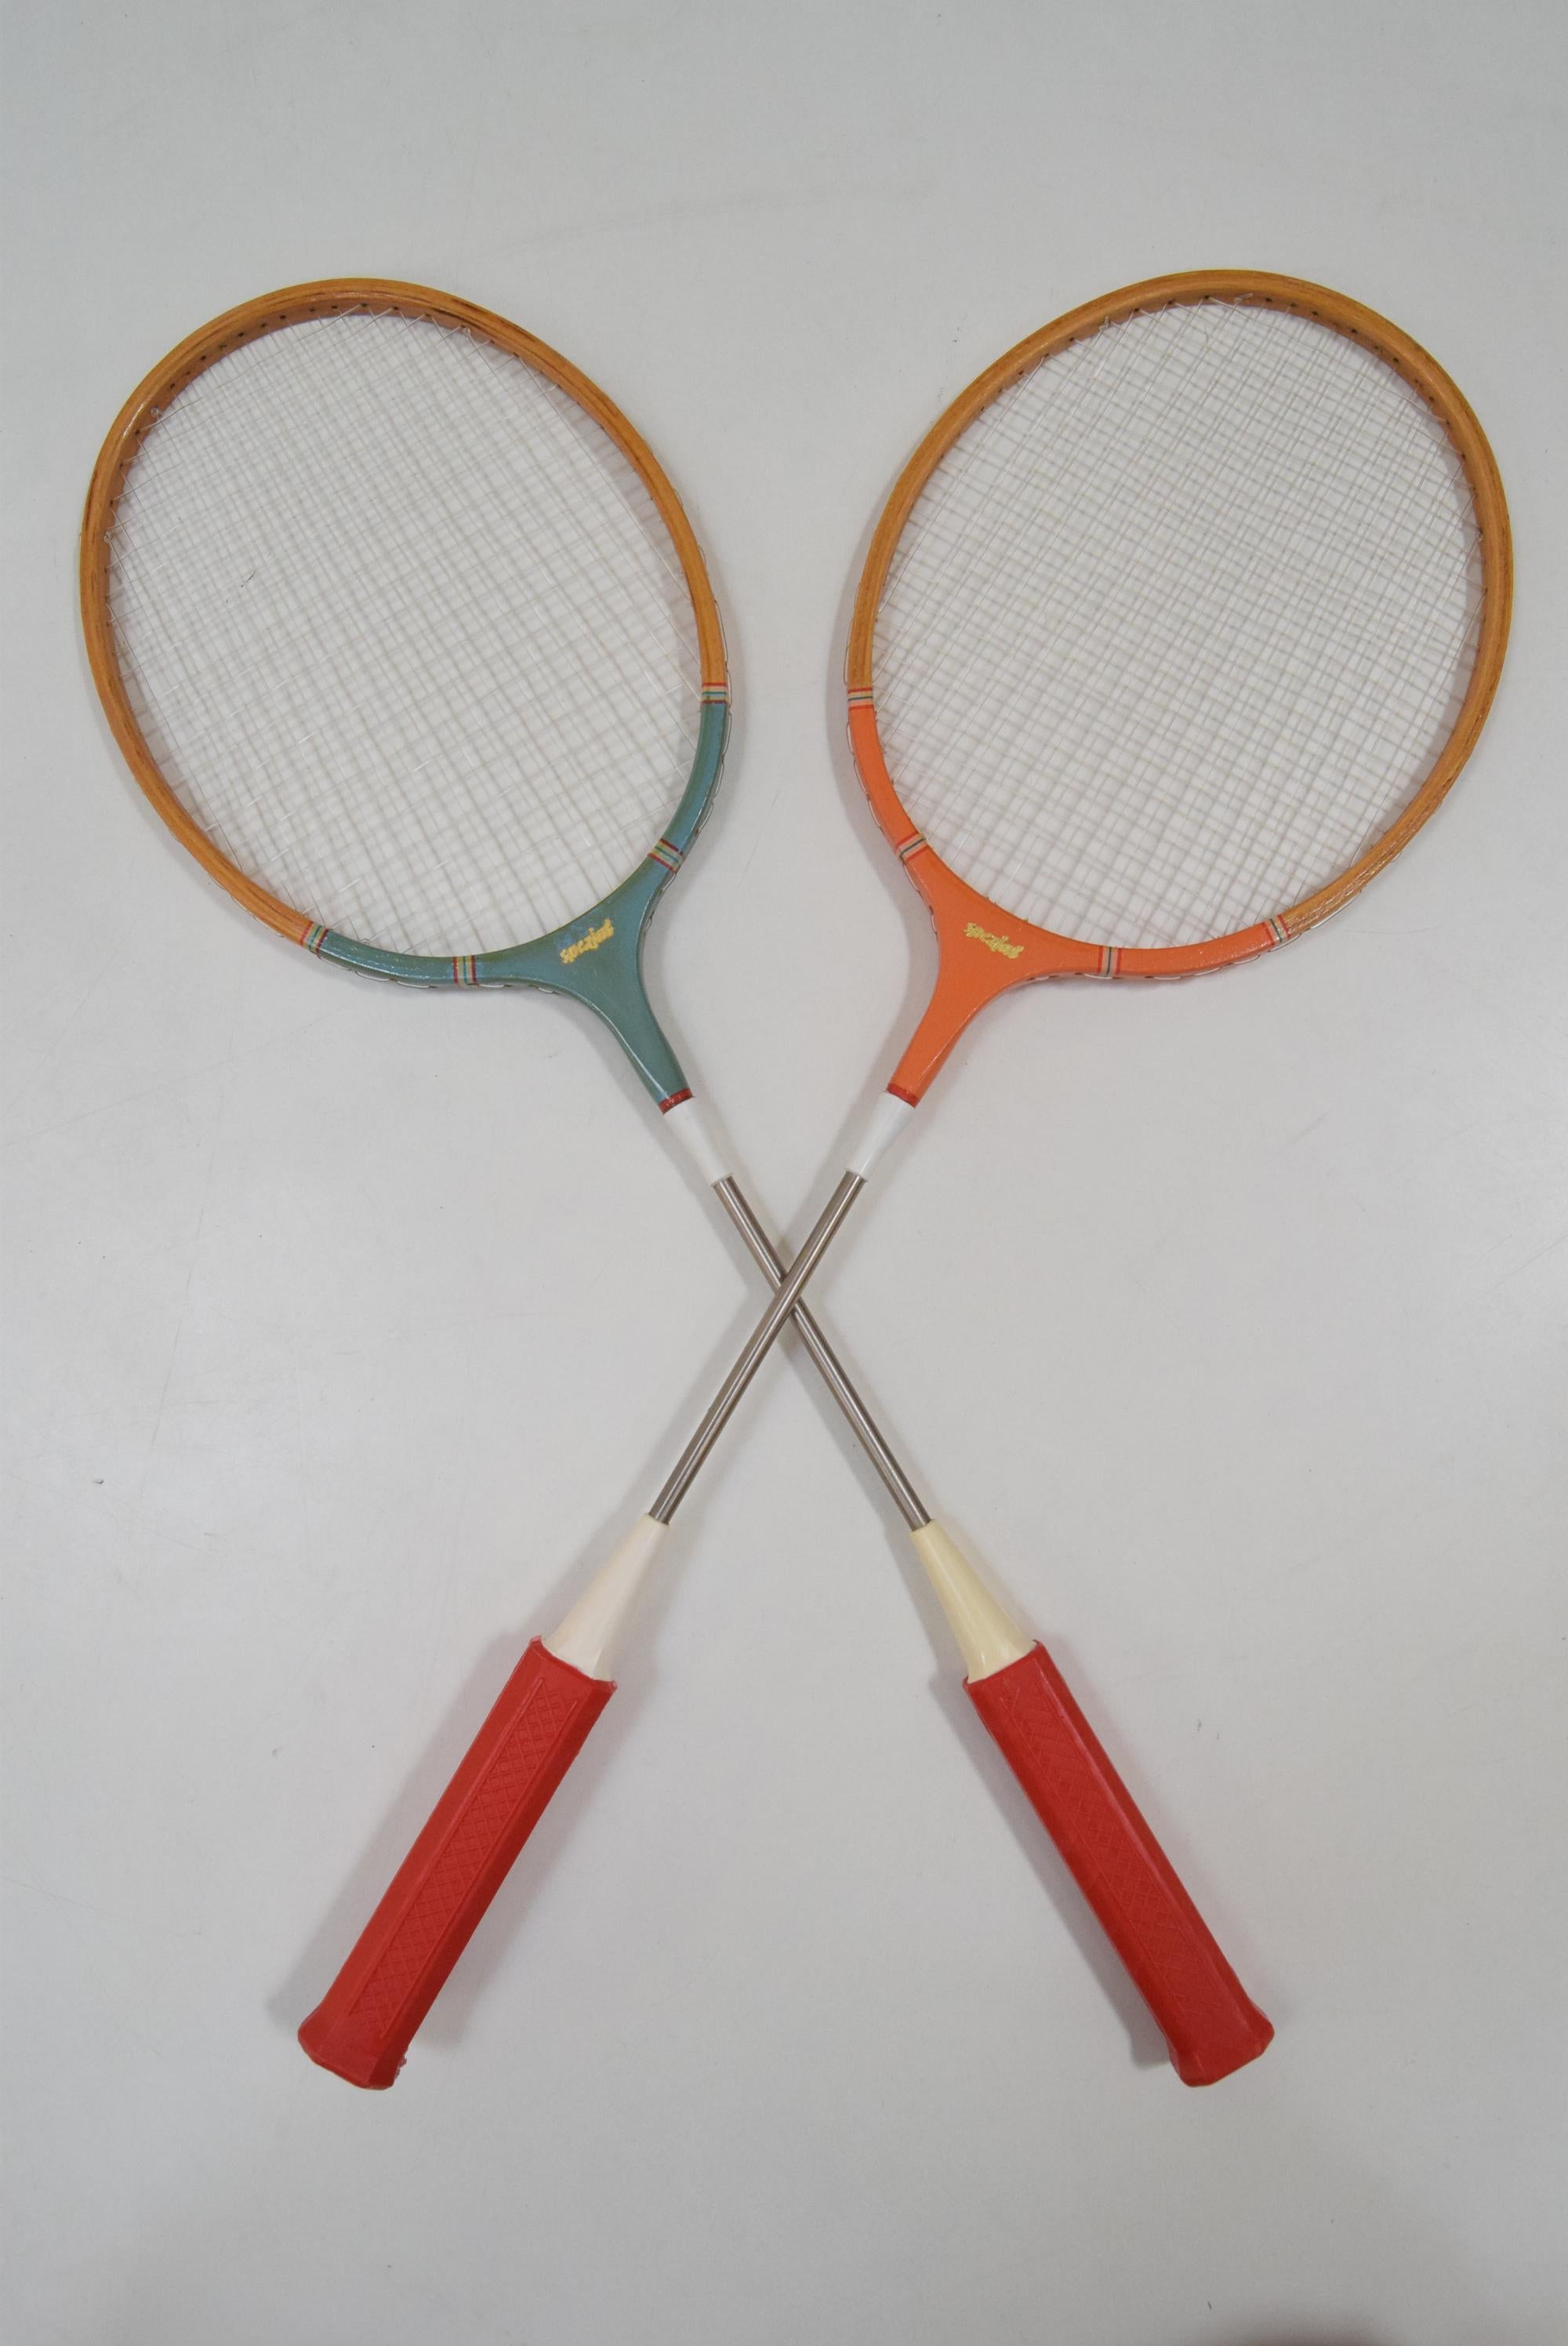 Late 20th Century Pair of Vintage Badminton Rackets, circa 1980's